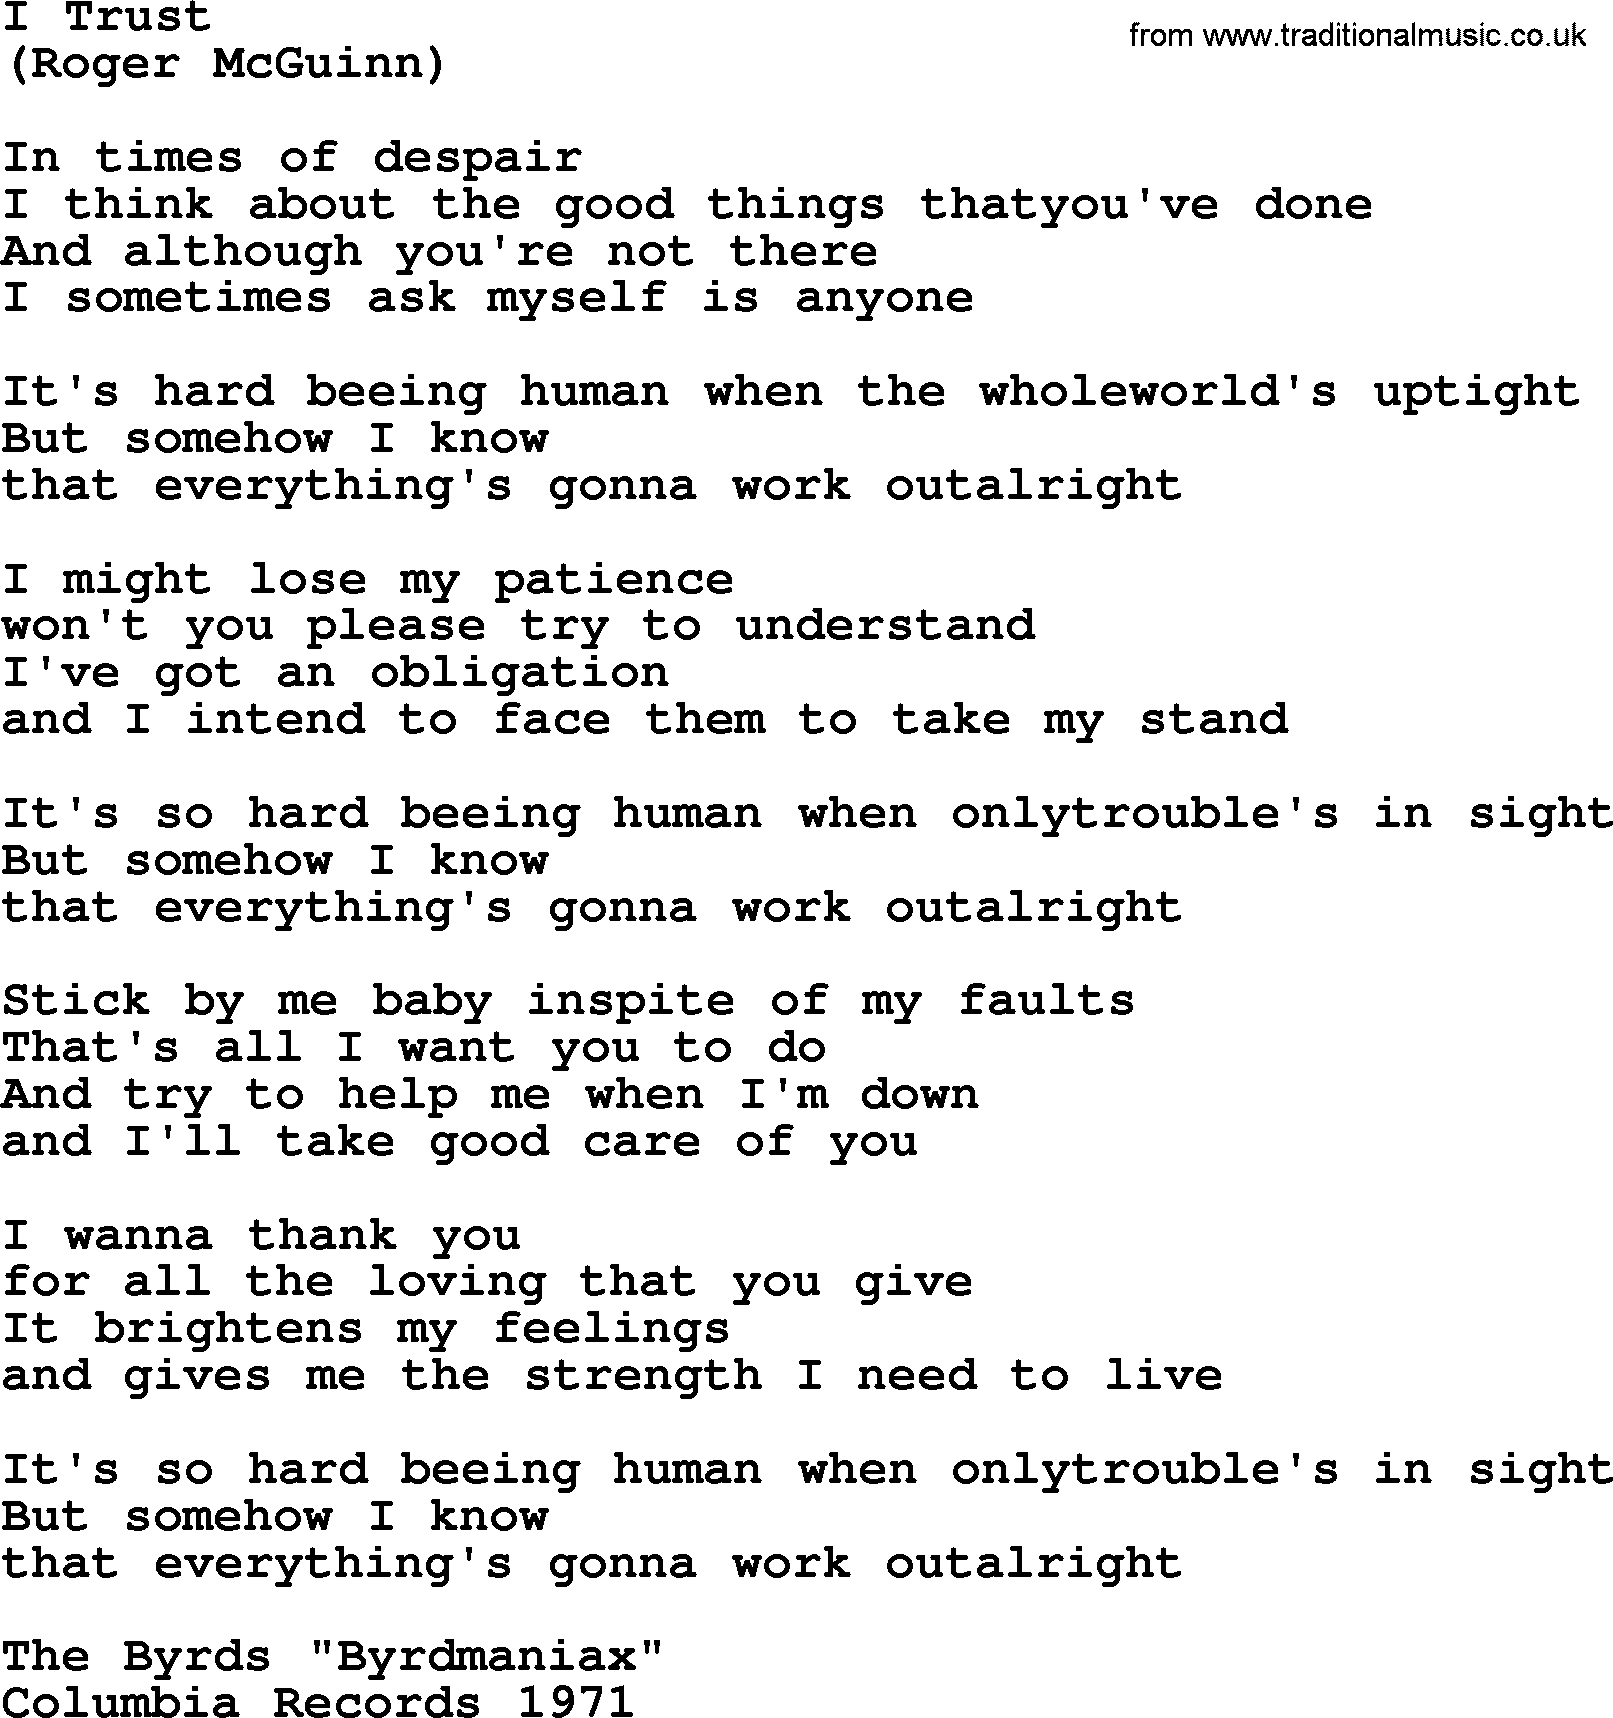 The Byrds song I Trust, lyrics